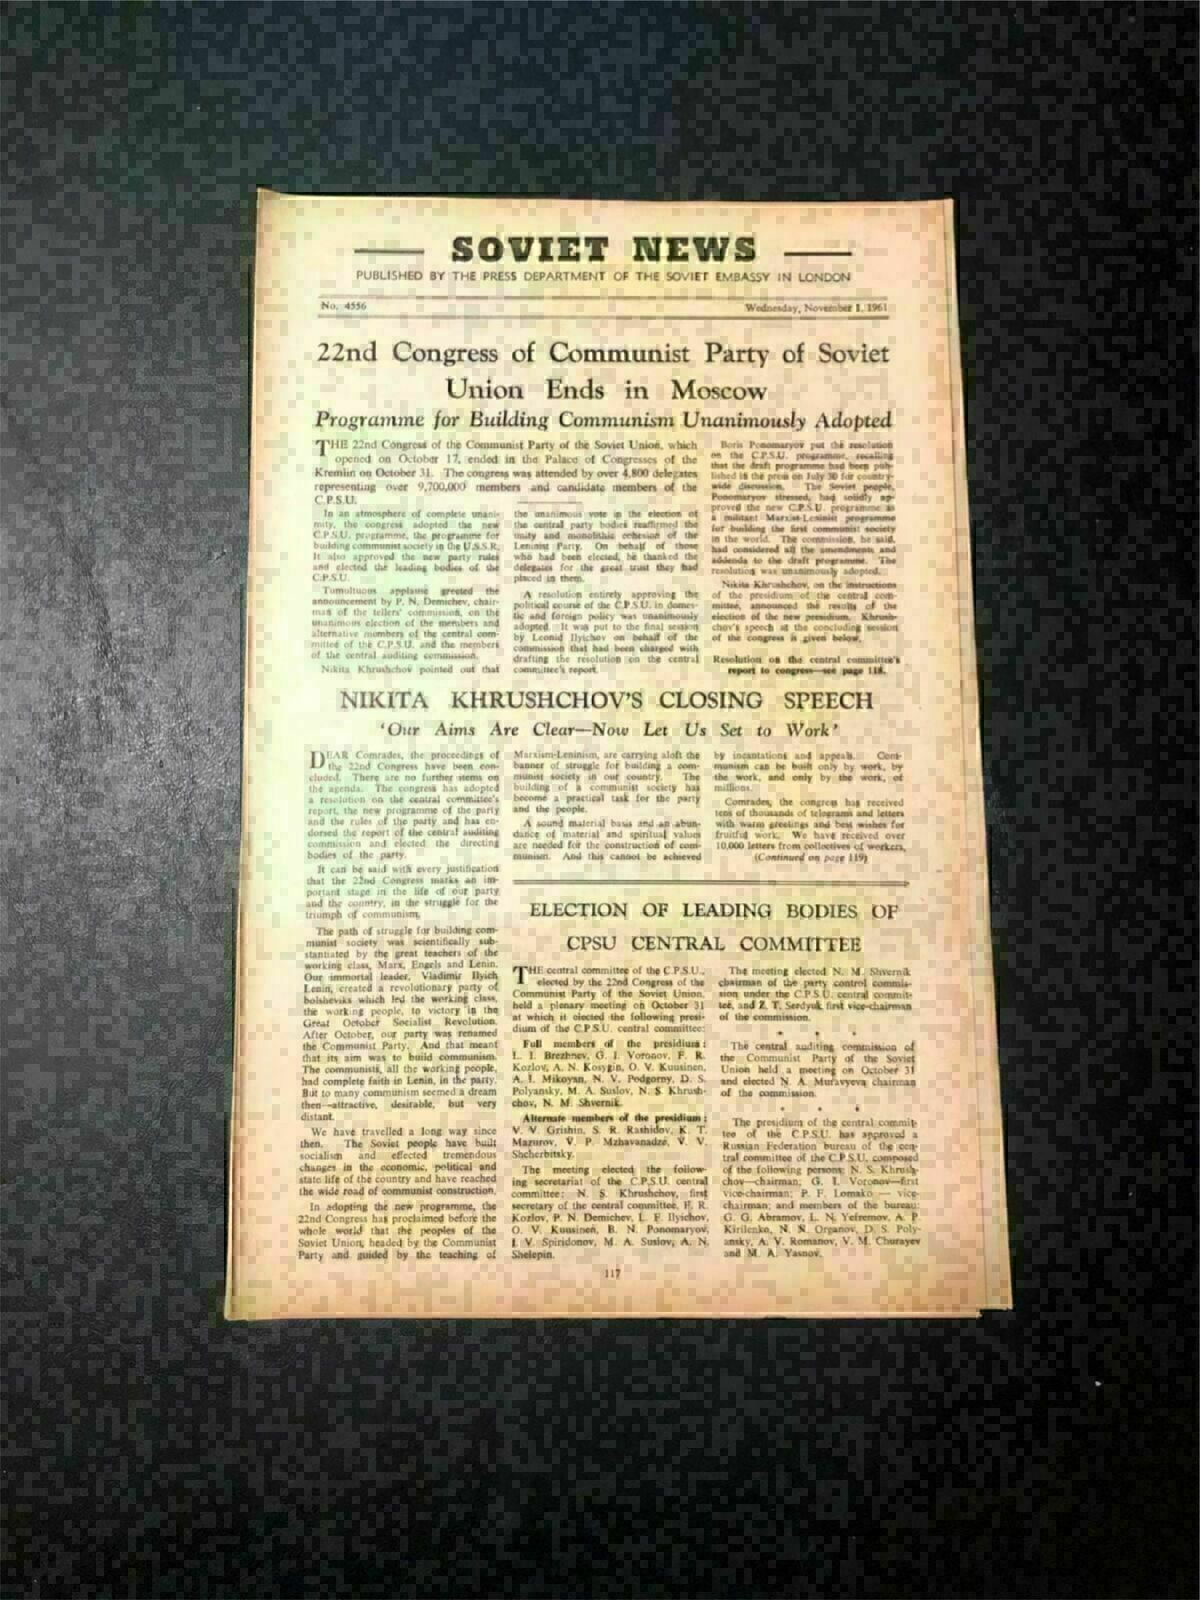 KL) USSR Soviet Weekly Newspaper 22nd CONGRESS OF COMMUNIST PARTY Nov 1 1961